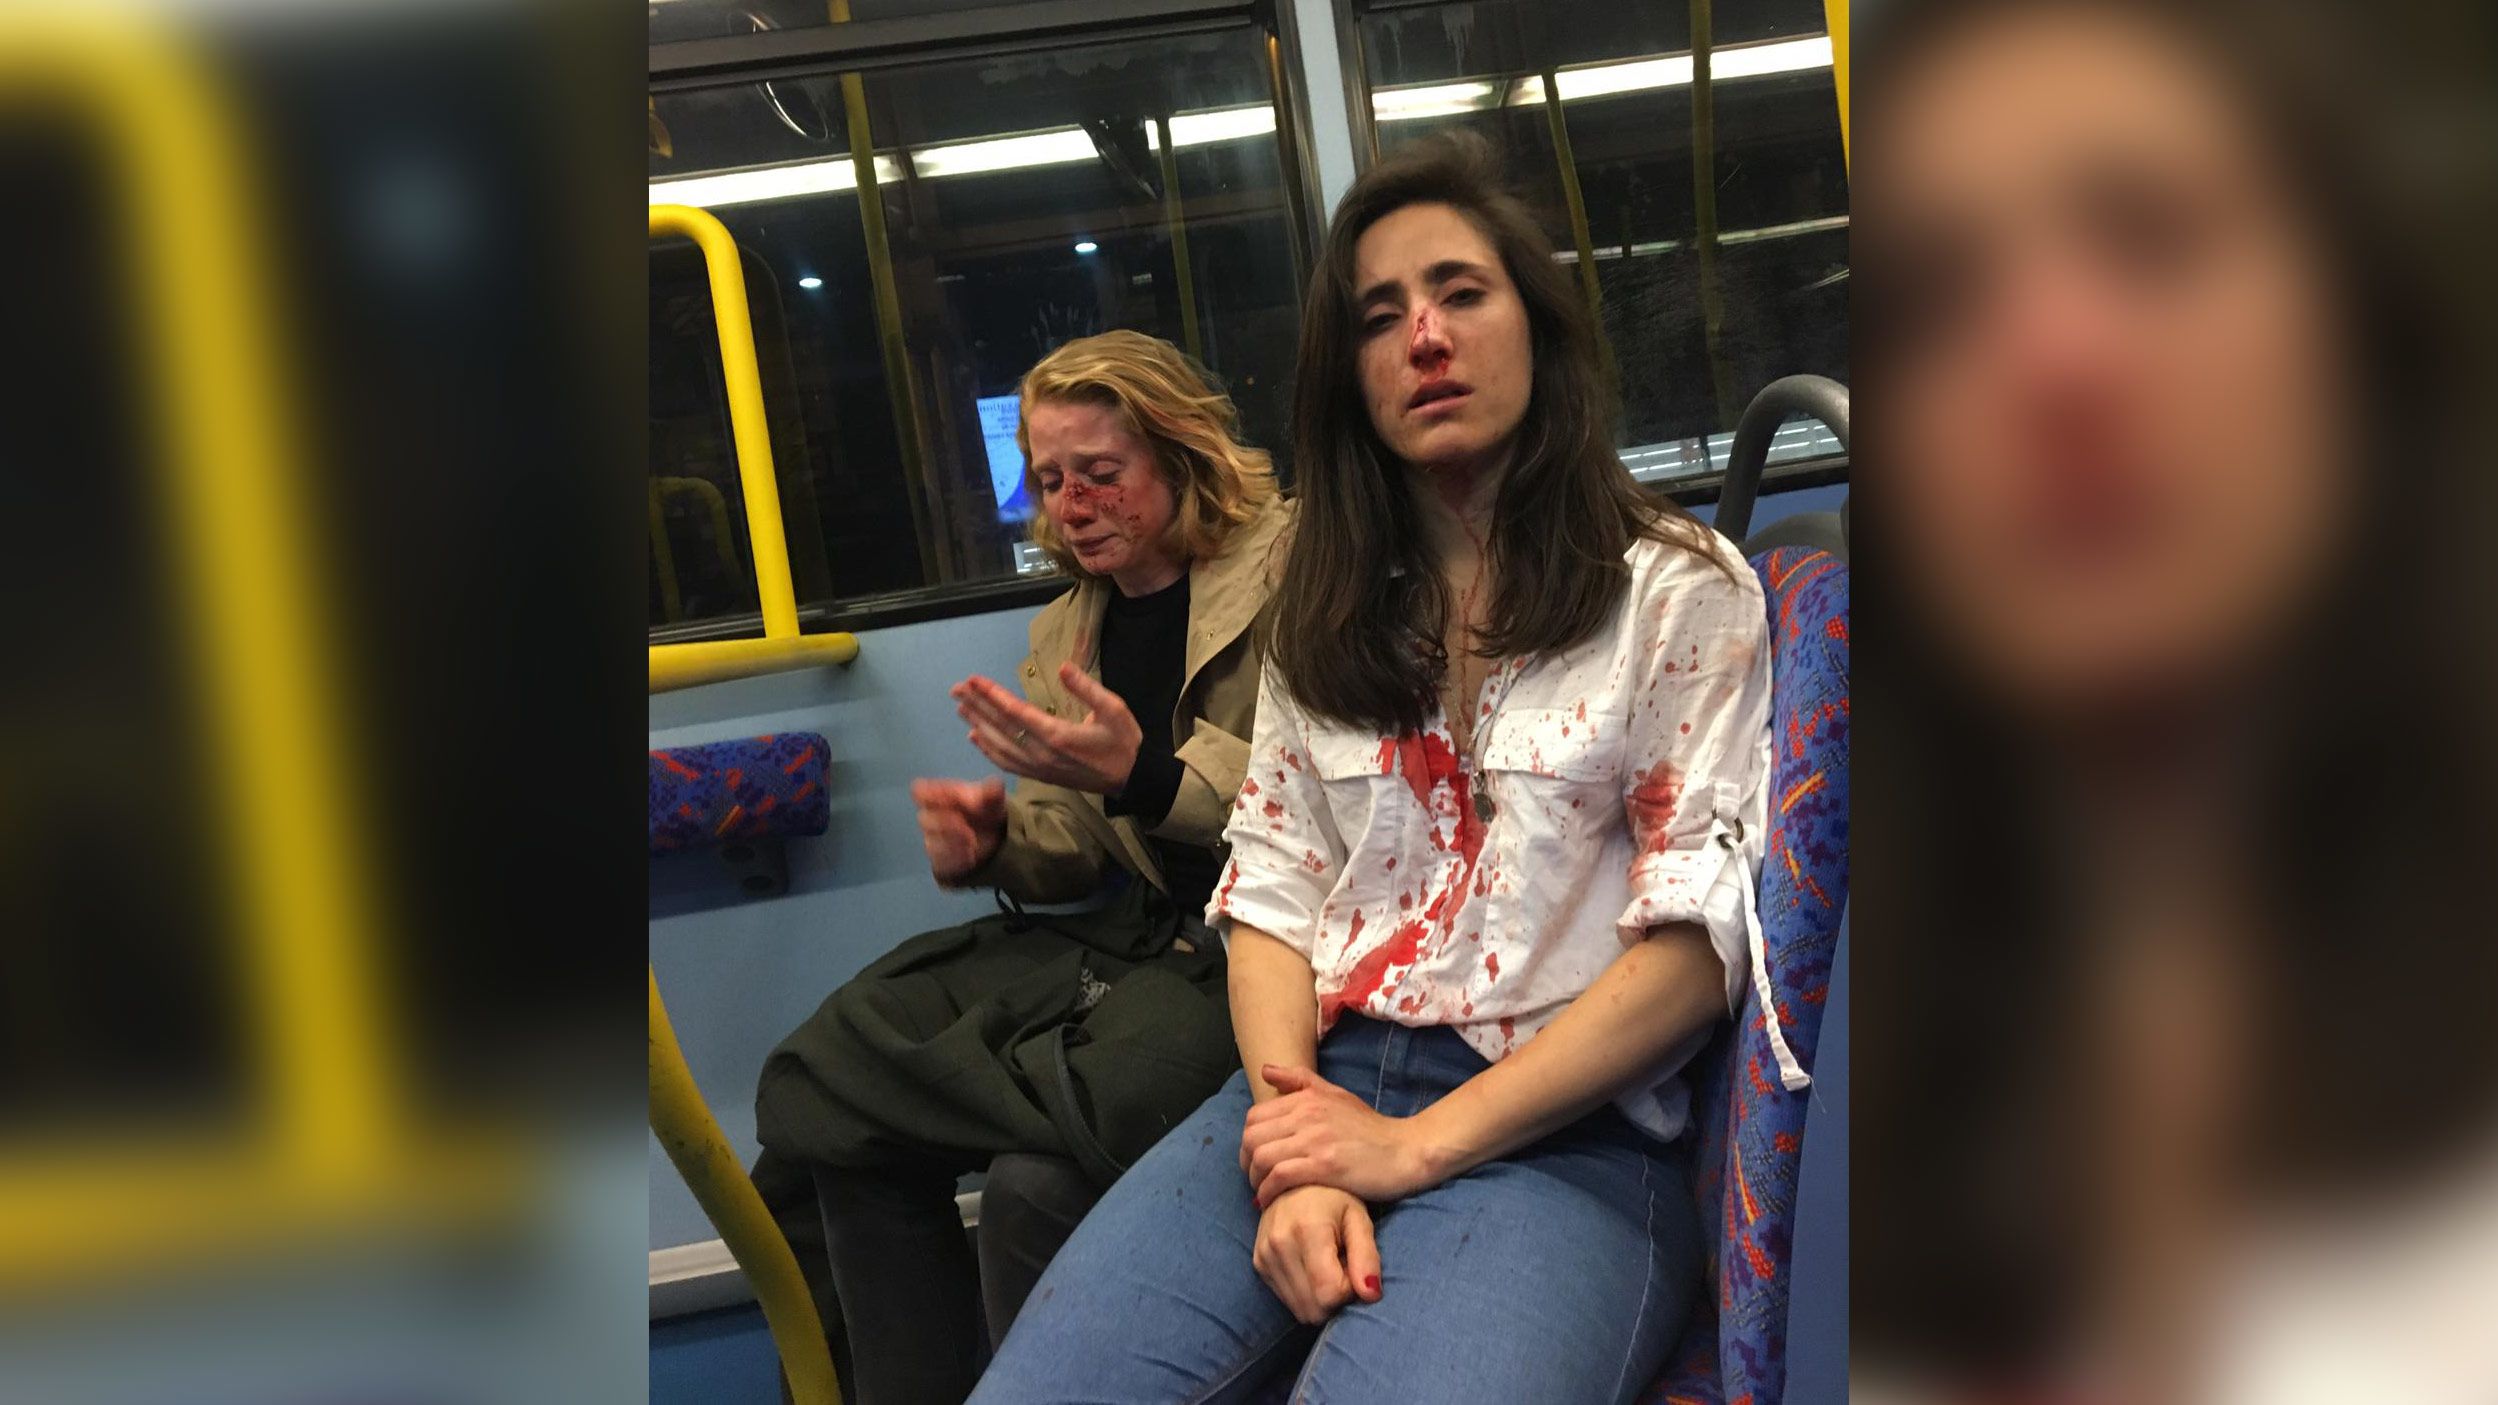 Bus Hot Rap Sex - London bus attack: Lesbian couple viciously beaten in homophobic incident |  CNN